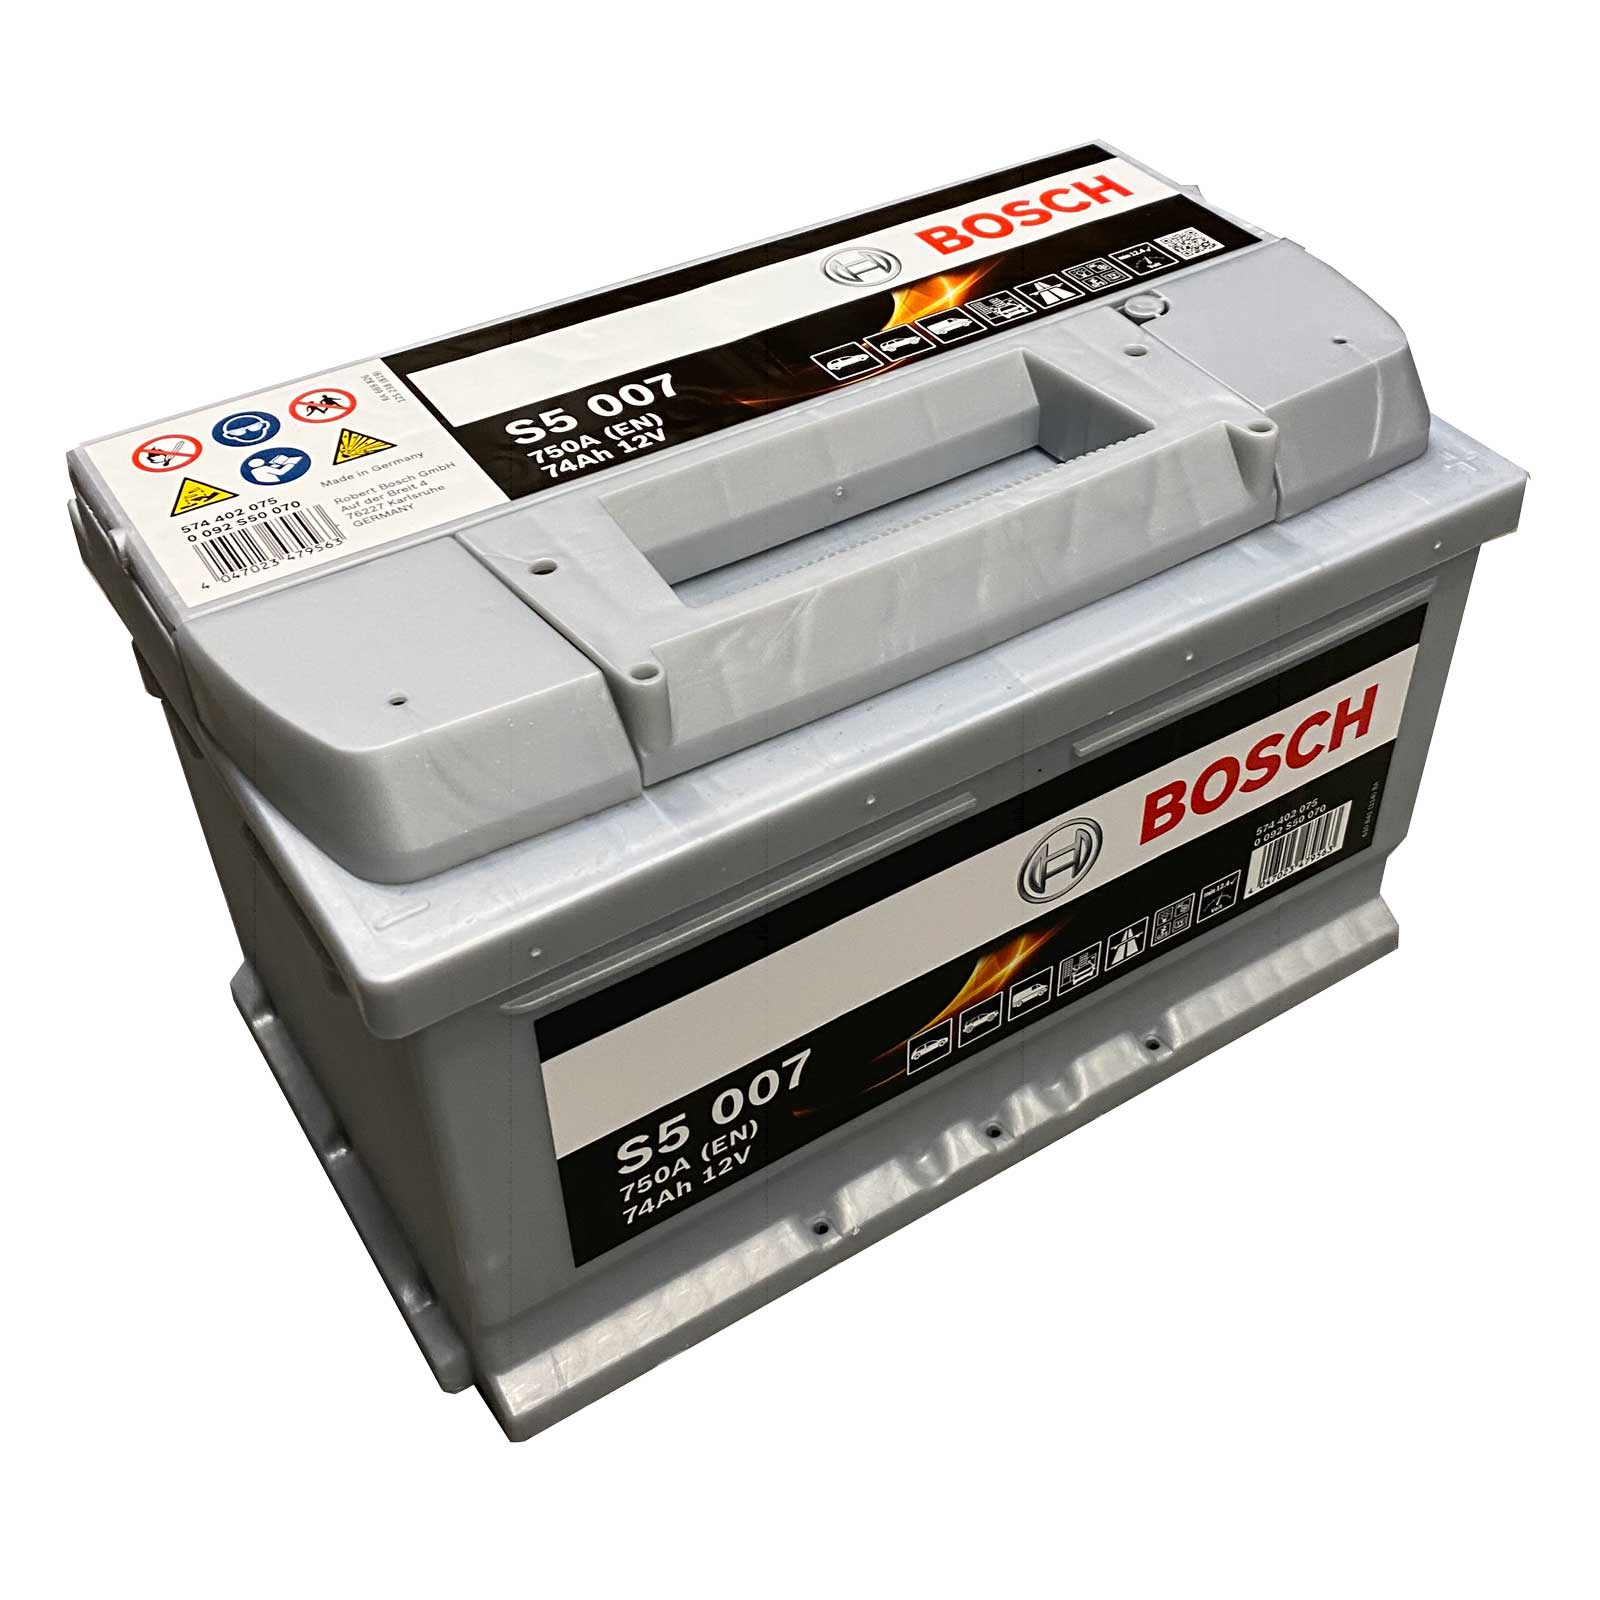 Bosch S5 008 Autobatterie 12V 77Ah 780A